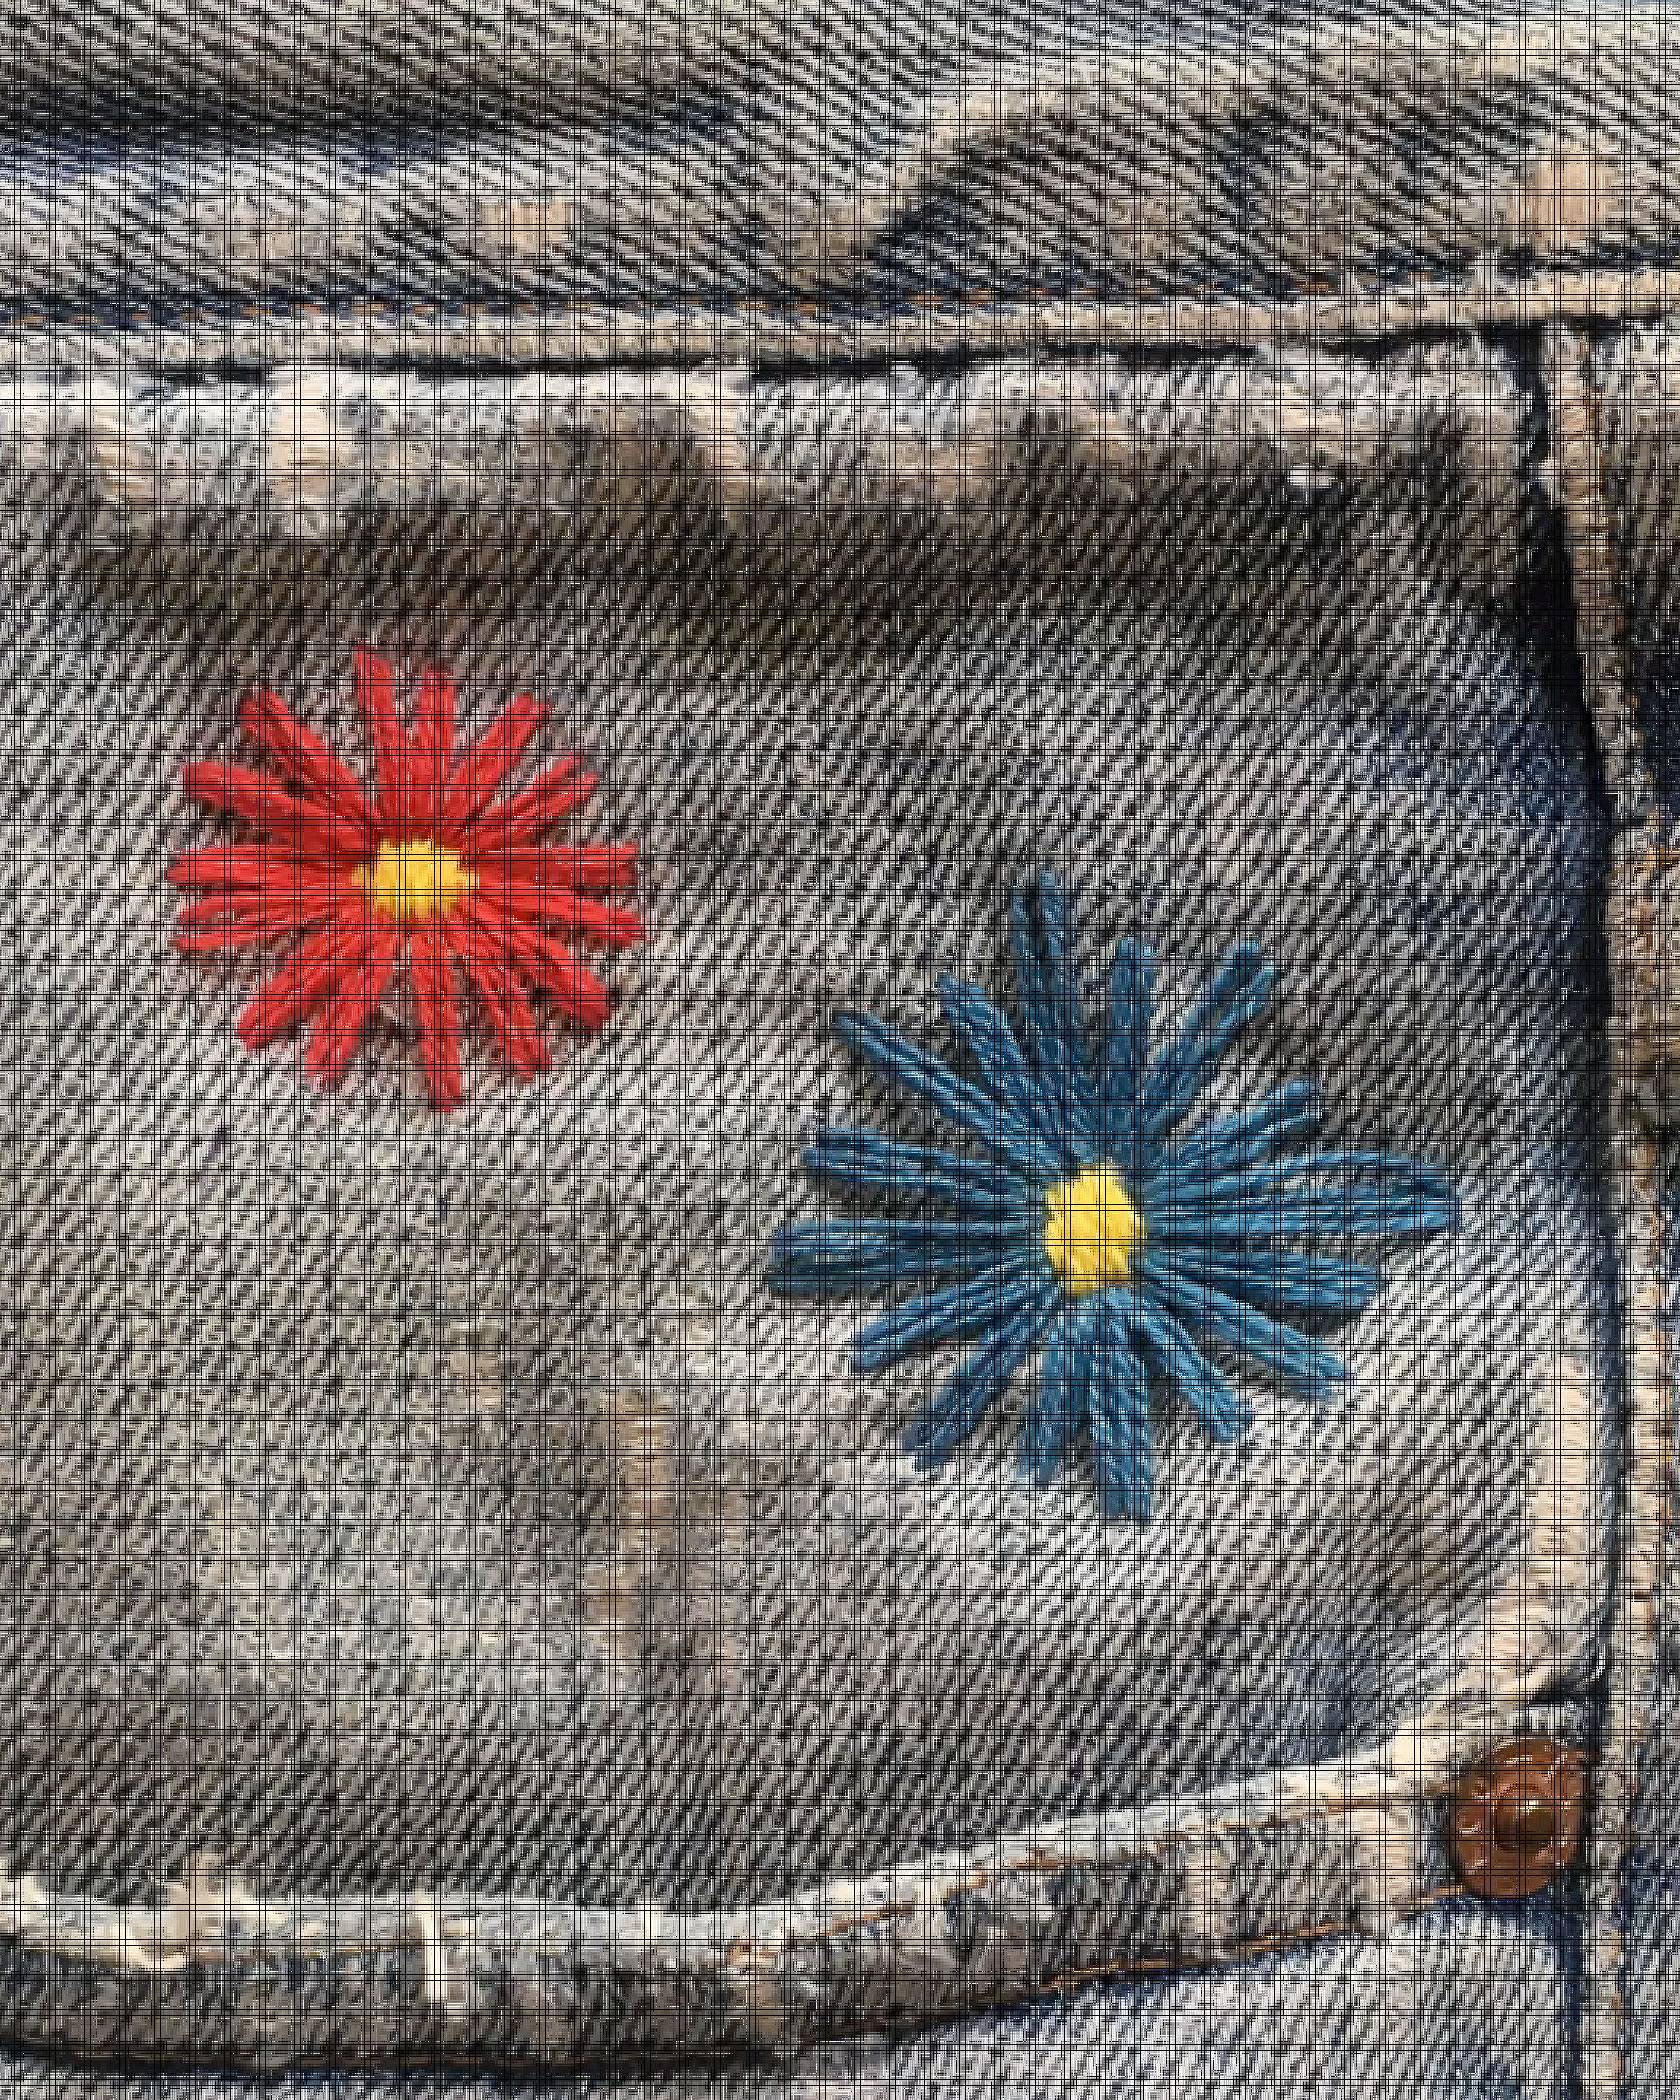 floral design on denim embroidery